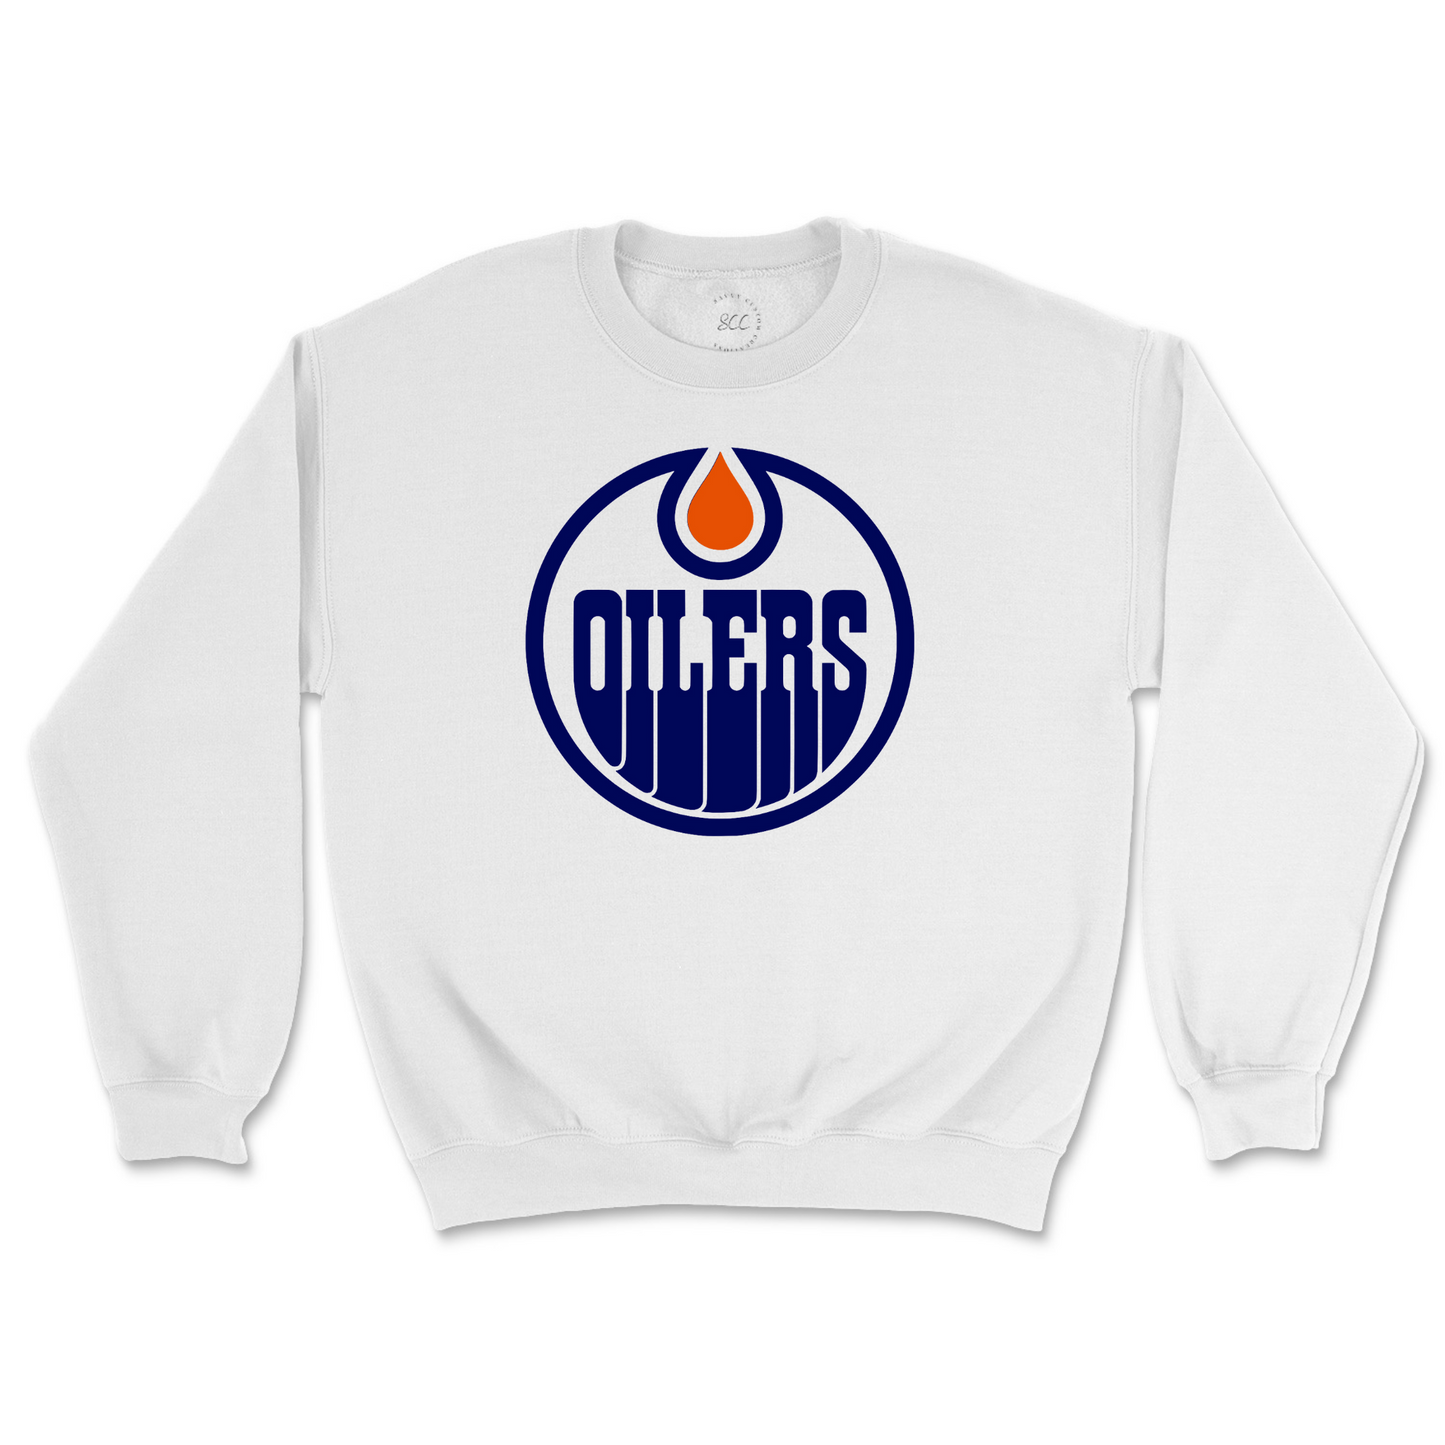 Oilers Premium Unisex Sweatshirt